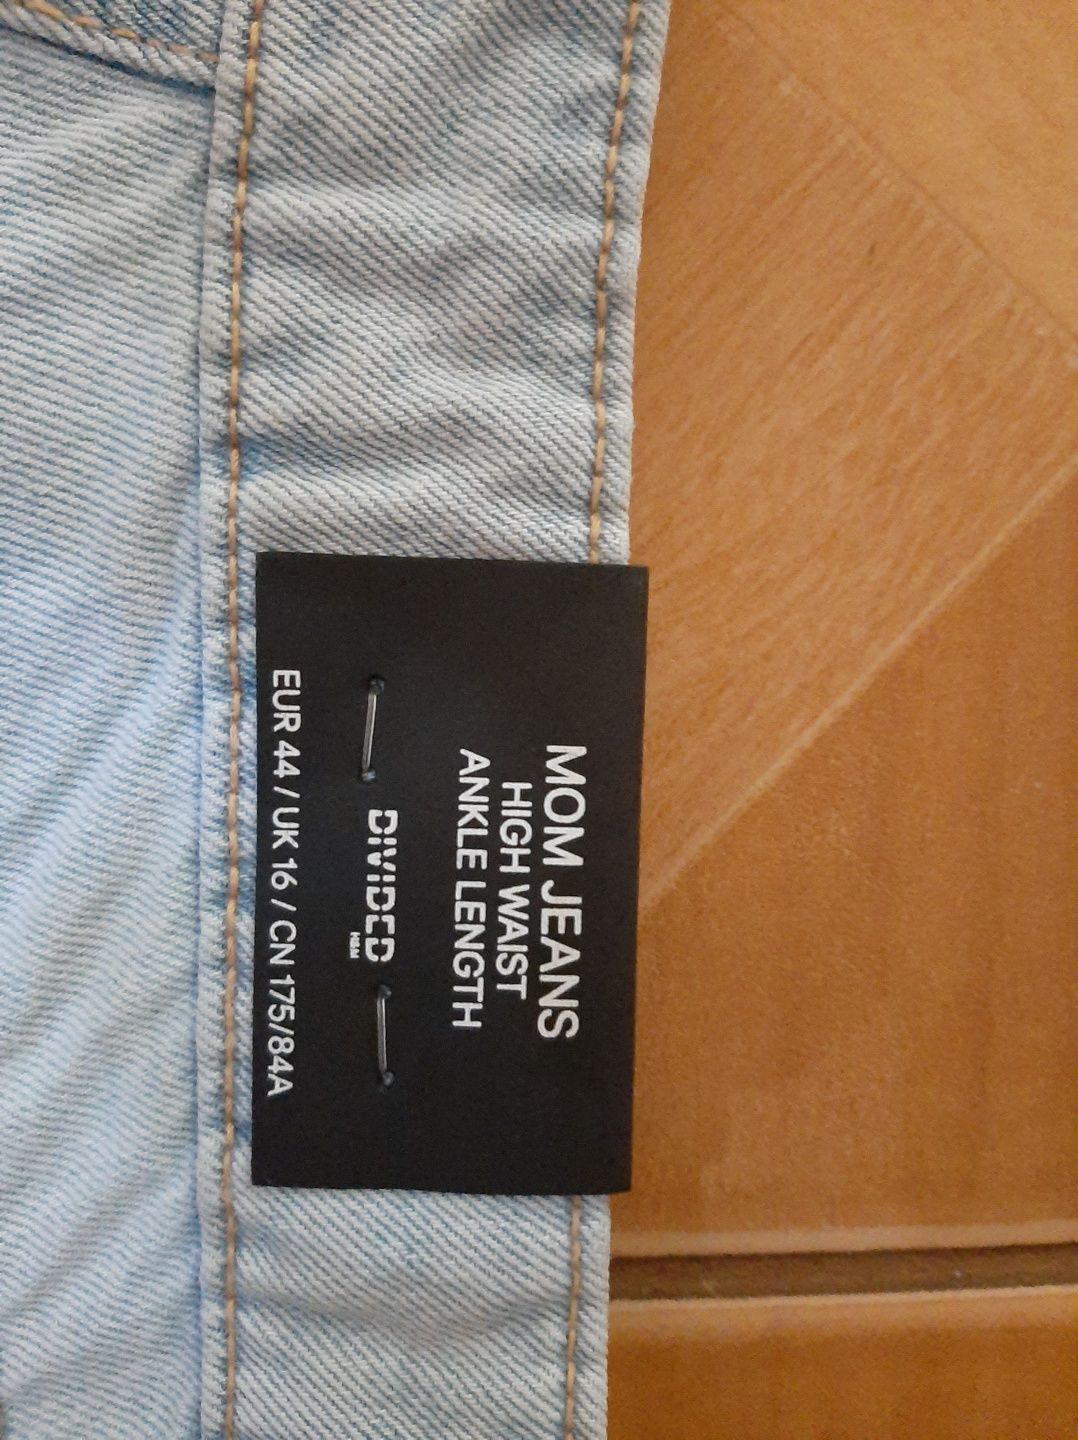 Blugi H&M mom jeans marimea 44